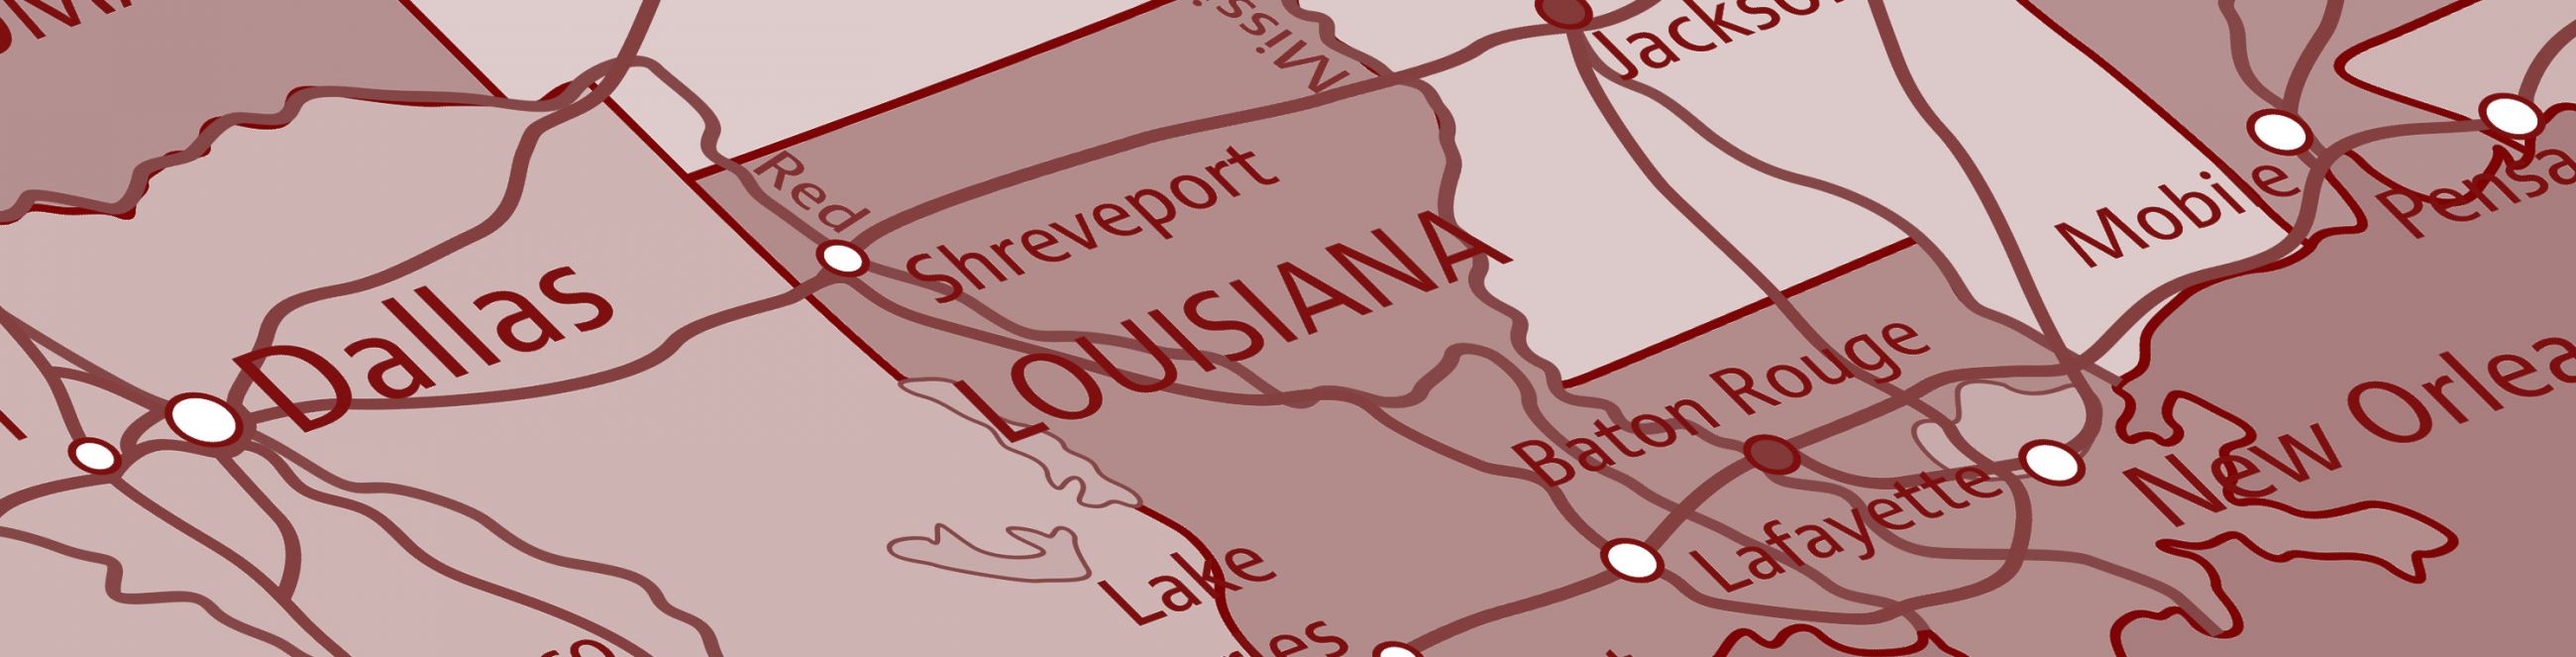 Delta 8 Louisiana Facts & Is Delta 8 Legal in Louisiana?